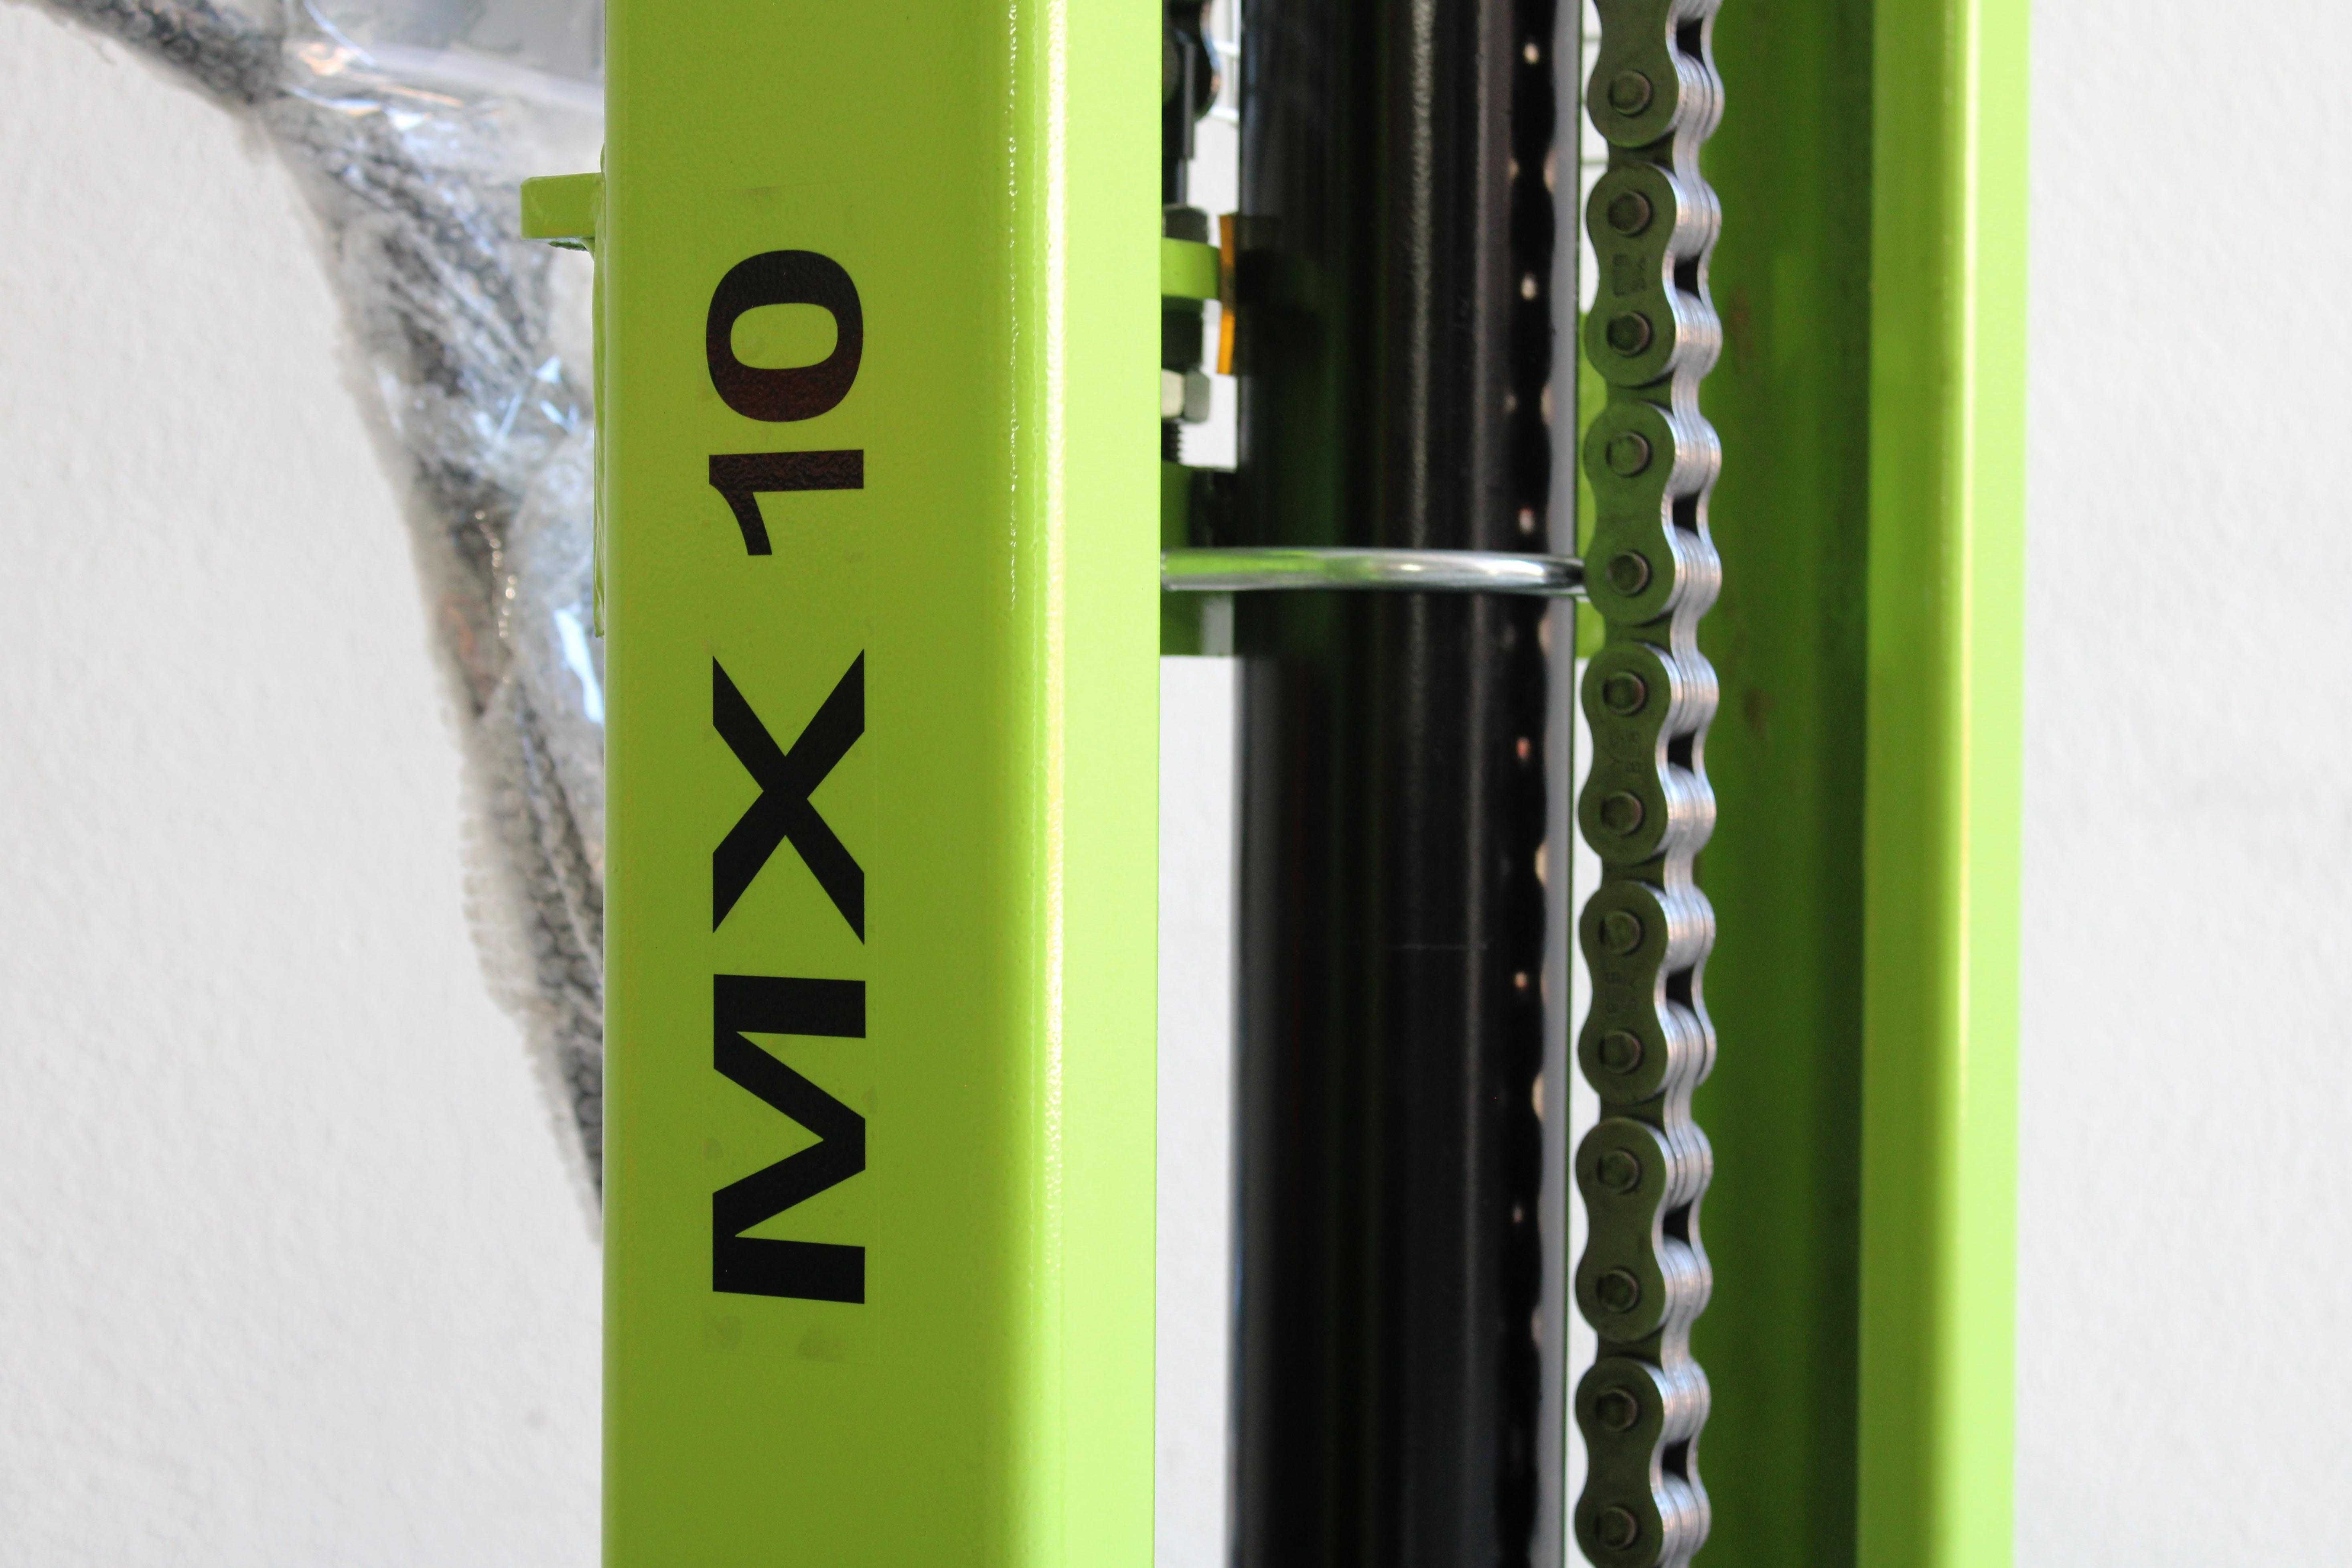 Porta-paletes (stacker) manual Pramac MX 10 - novo (IVA Inc.)